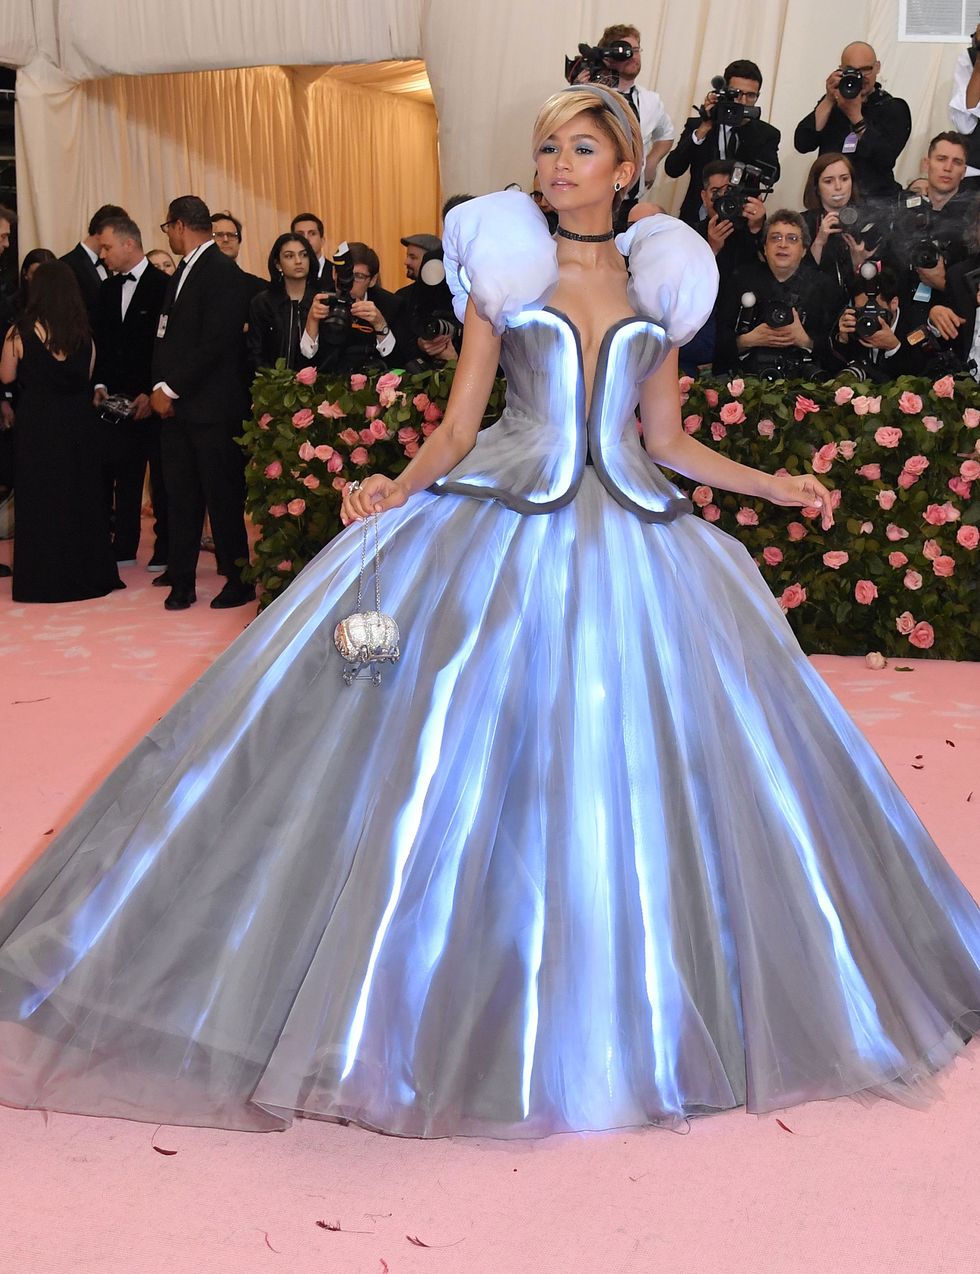 plan Klappe pels Zendaya dressed as Cinderella at the 2019 Met Gala in light-up dress